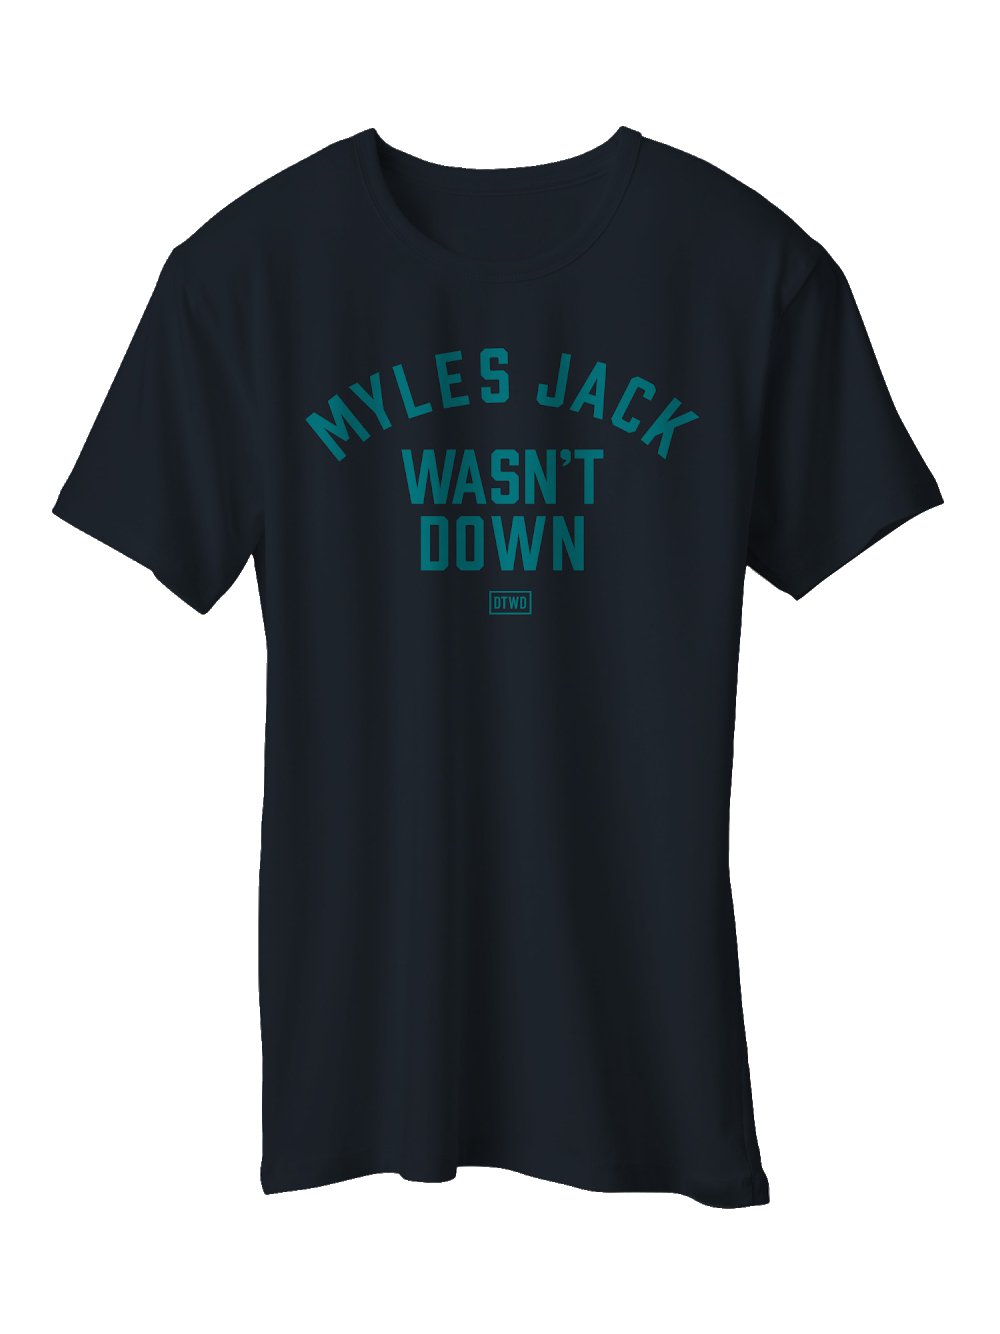 Image of New Jack City - Myles Jack Wasn't Down